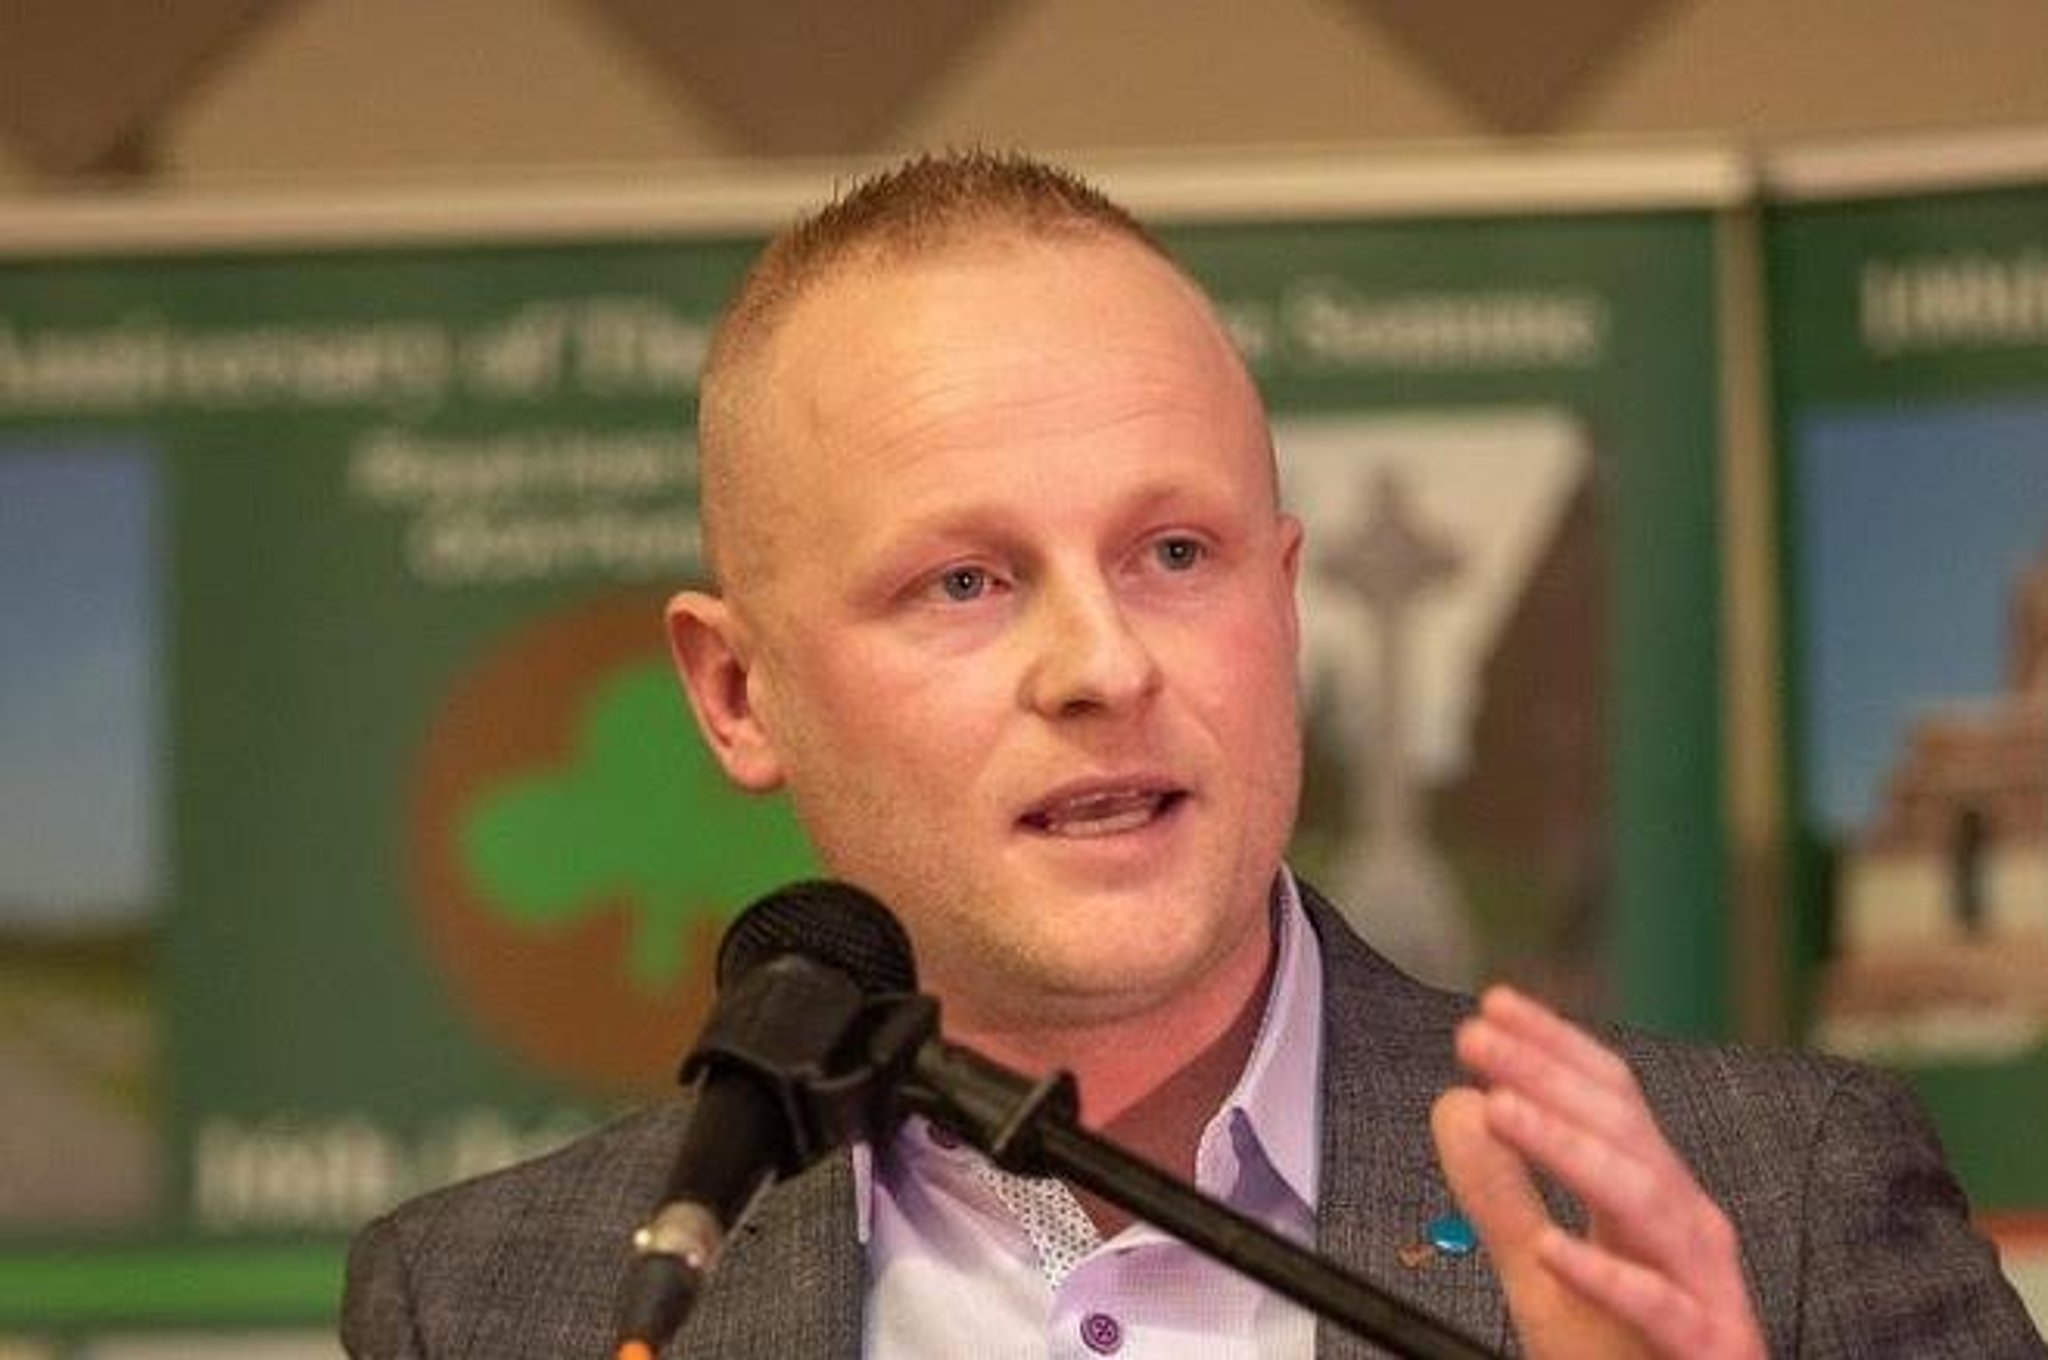 Northern Ireland Protocol: Jamie Bryson in call for non-violent protest